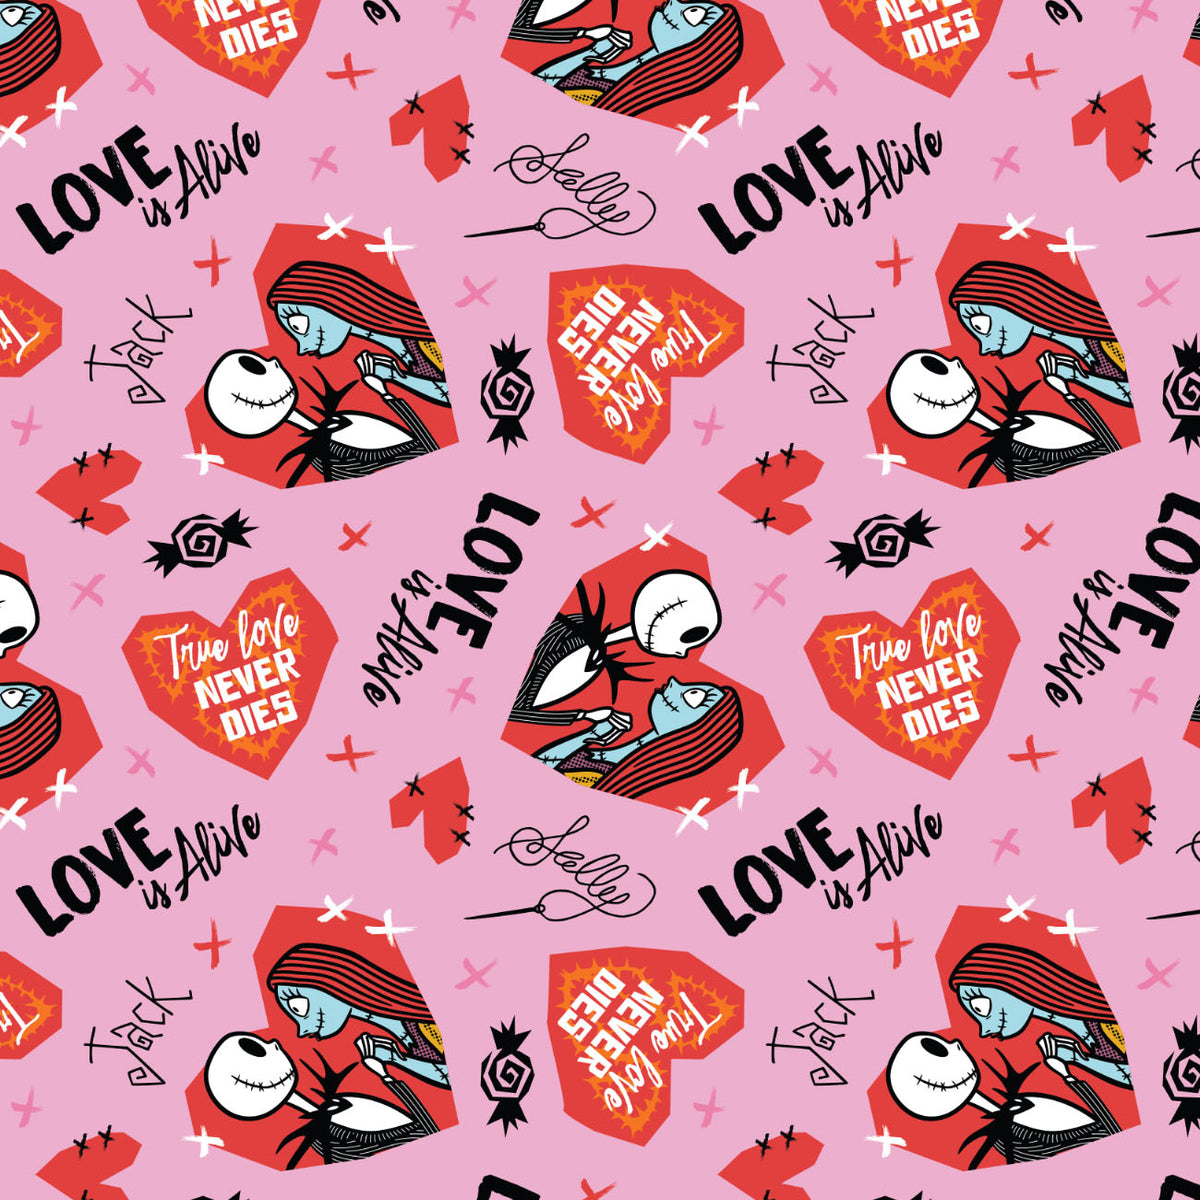 100+] Disney Valentine Wallpapers